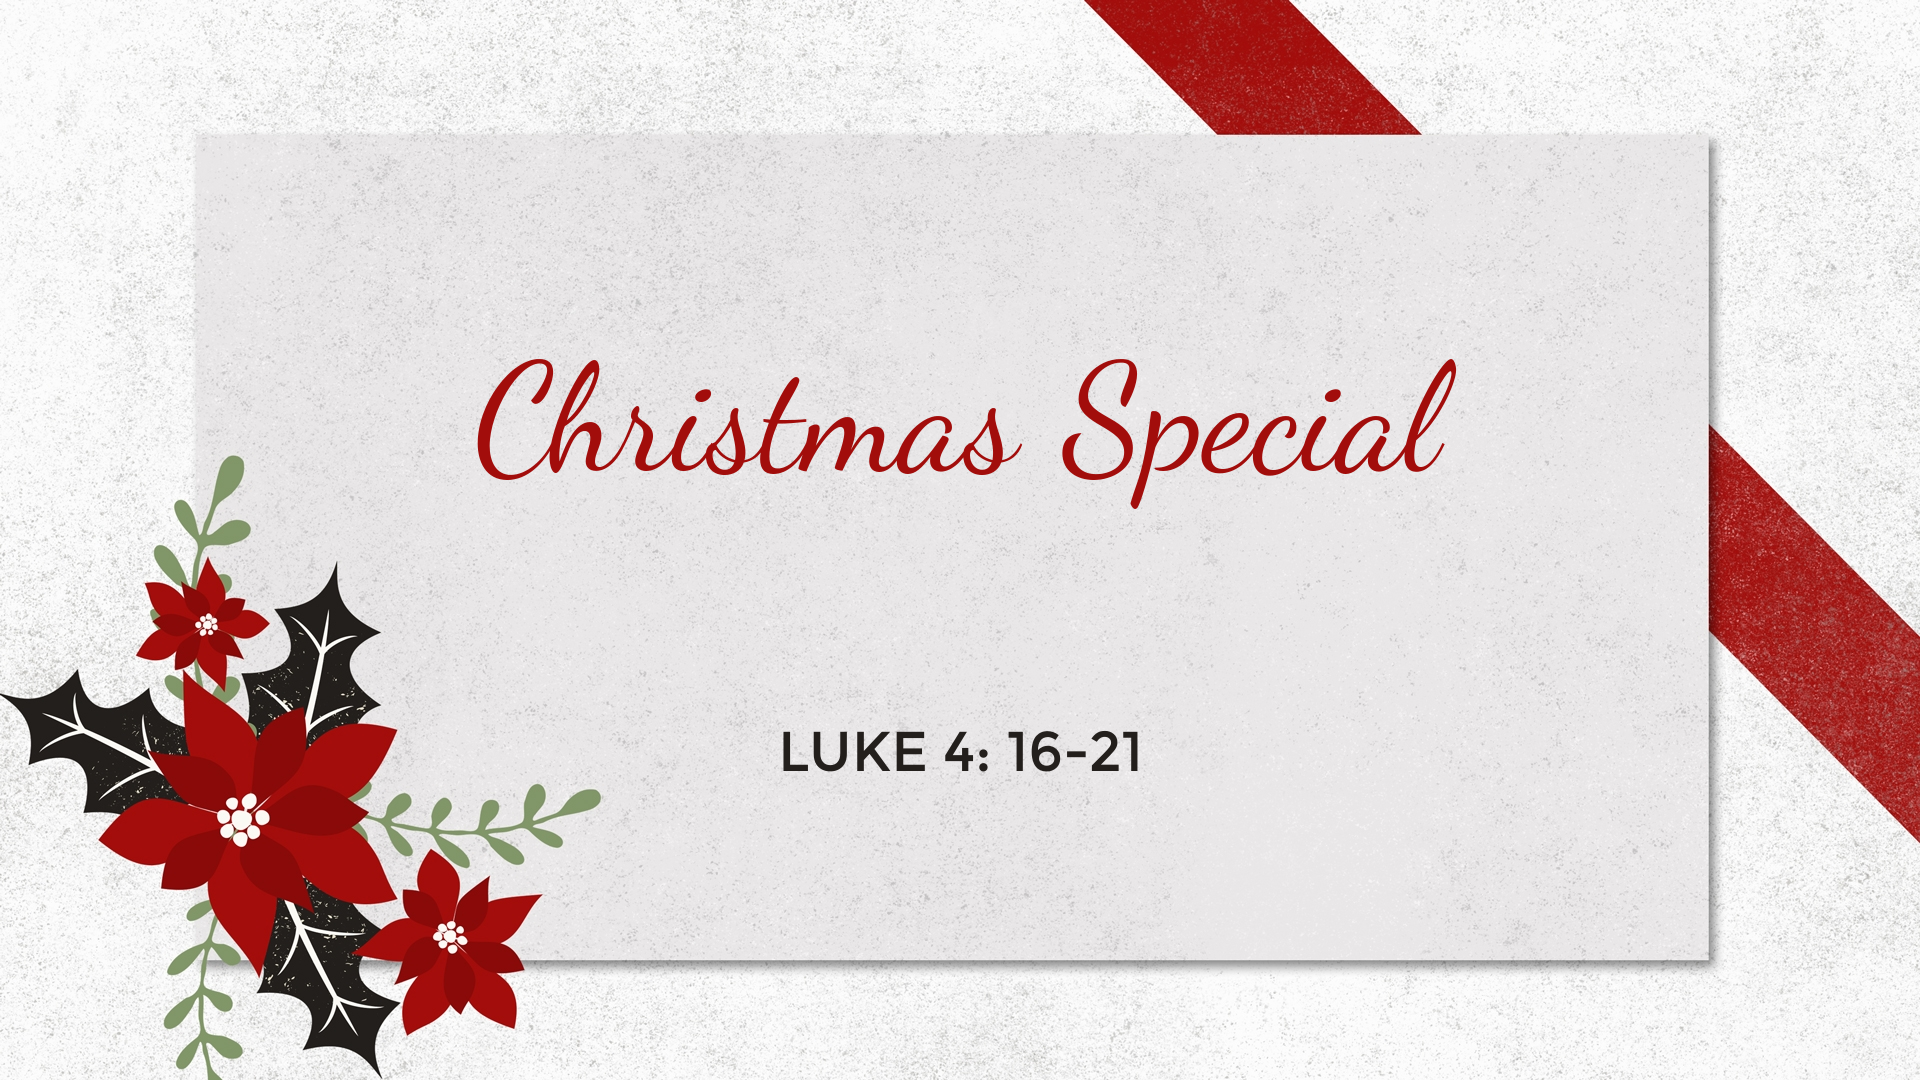 Dec 25, 2022 - Christmas Special (Video) - Luke 4: 16-21